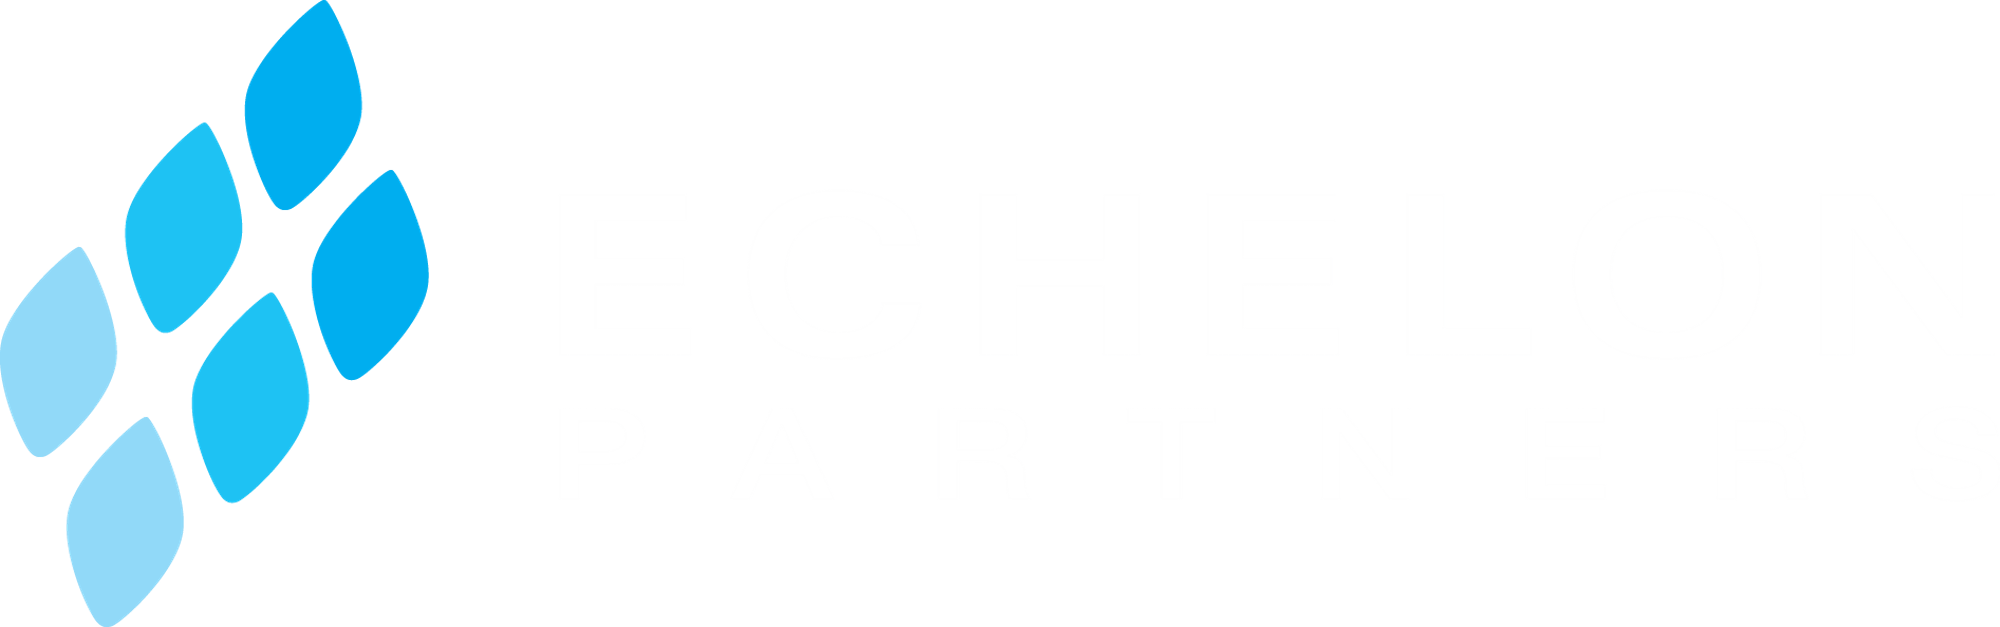 Echelon logo